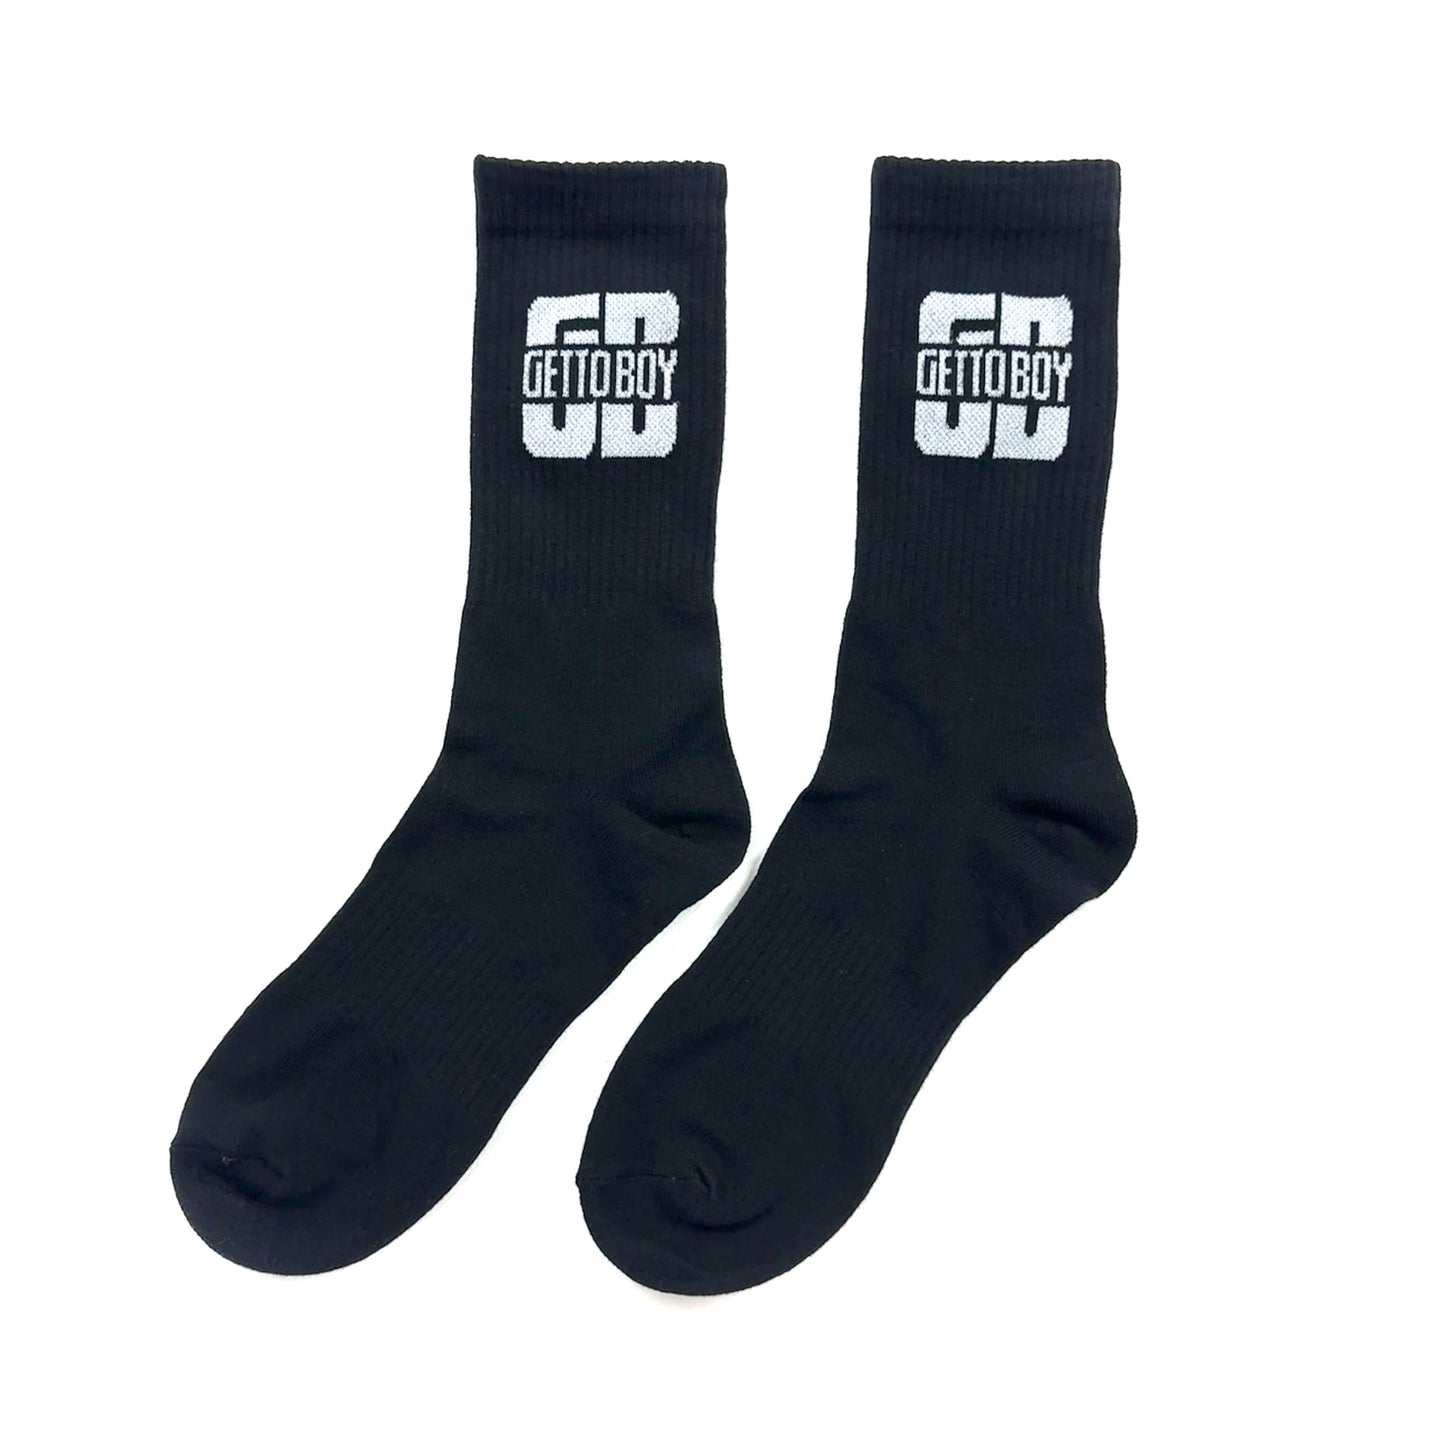 GB Socks